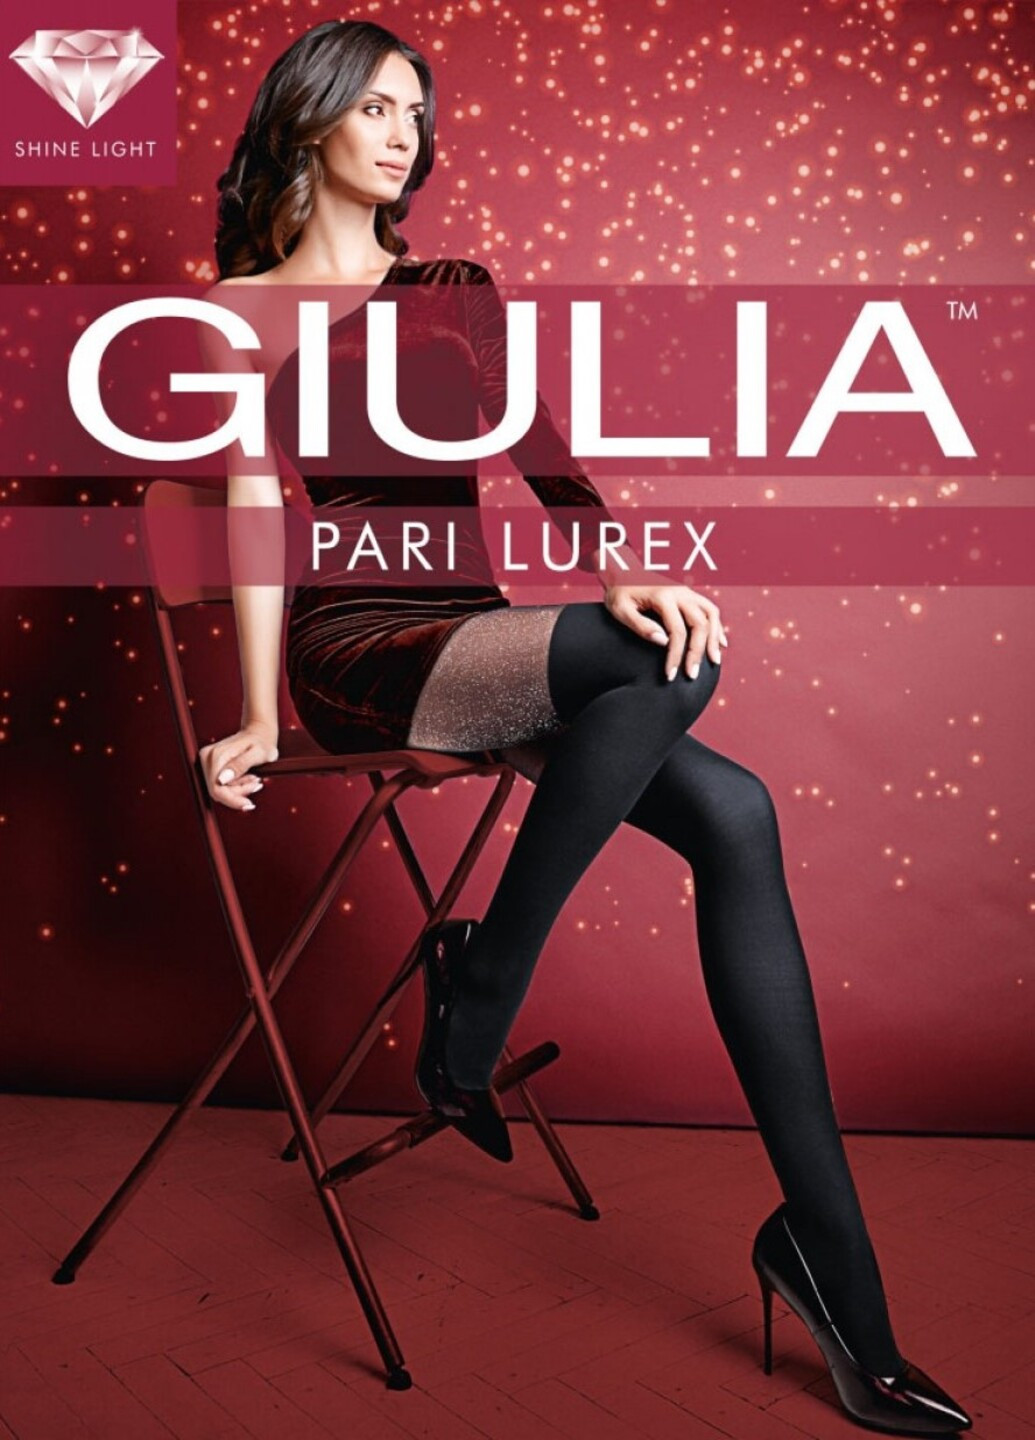 Колготки Giulia pari lurex 60 (1) (229300659)